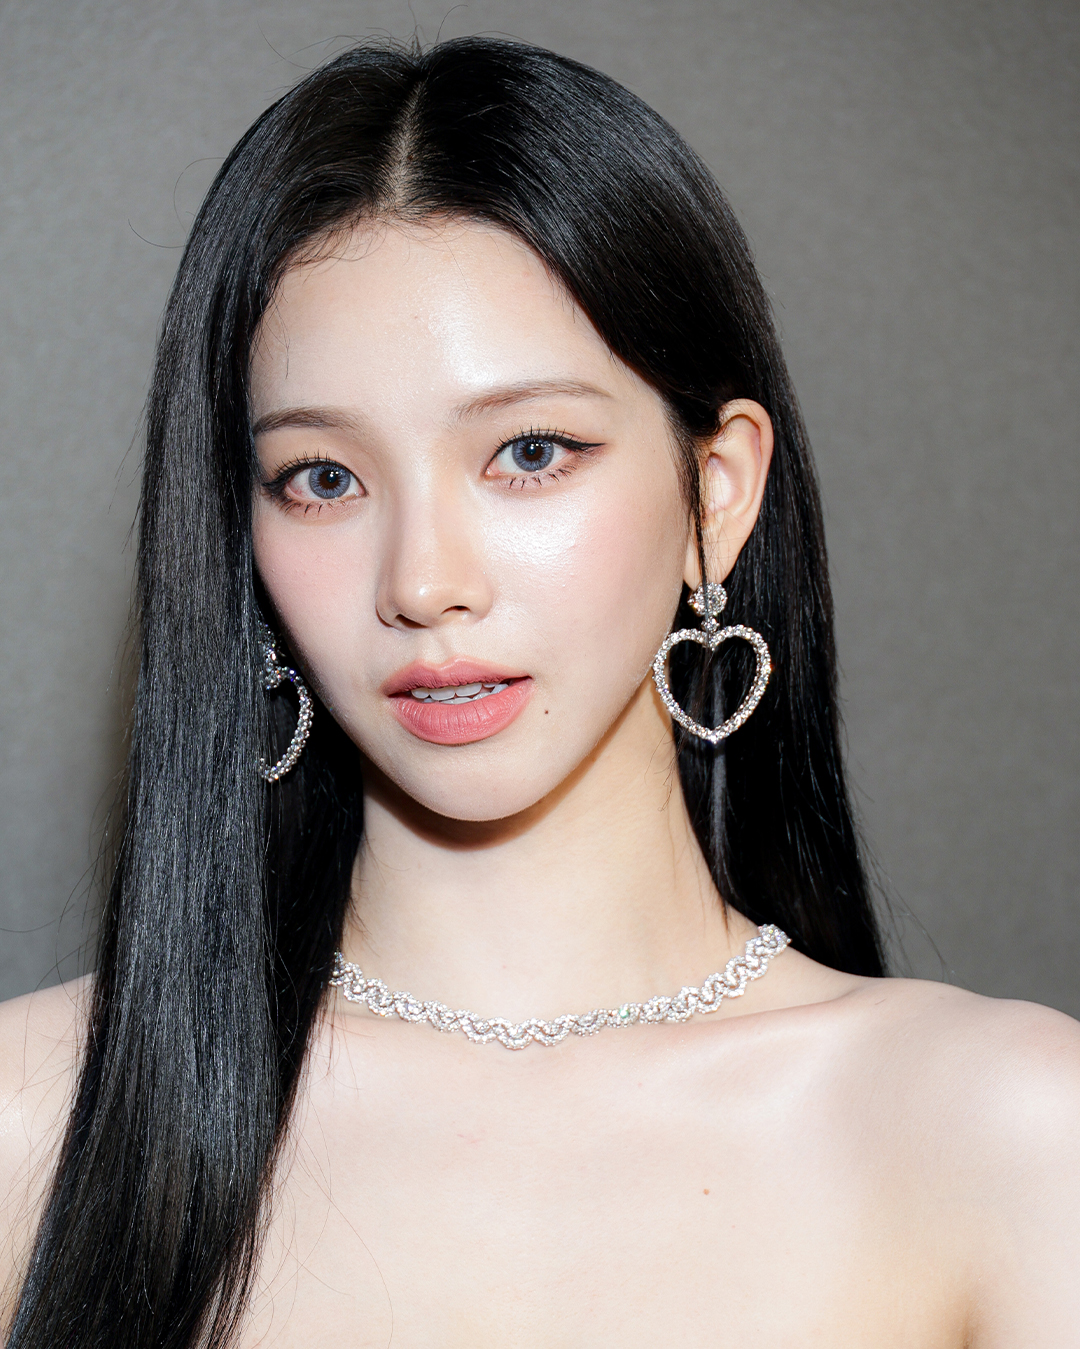 14 K-Pop Stars Who Love Their Diamond Jewelry - Only Natural Diamonds